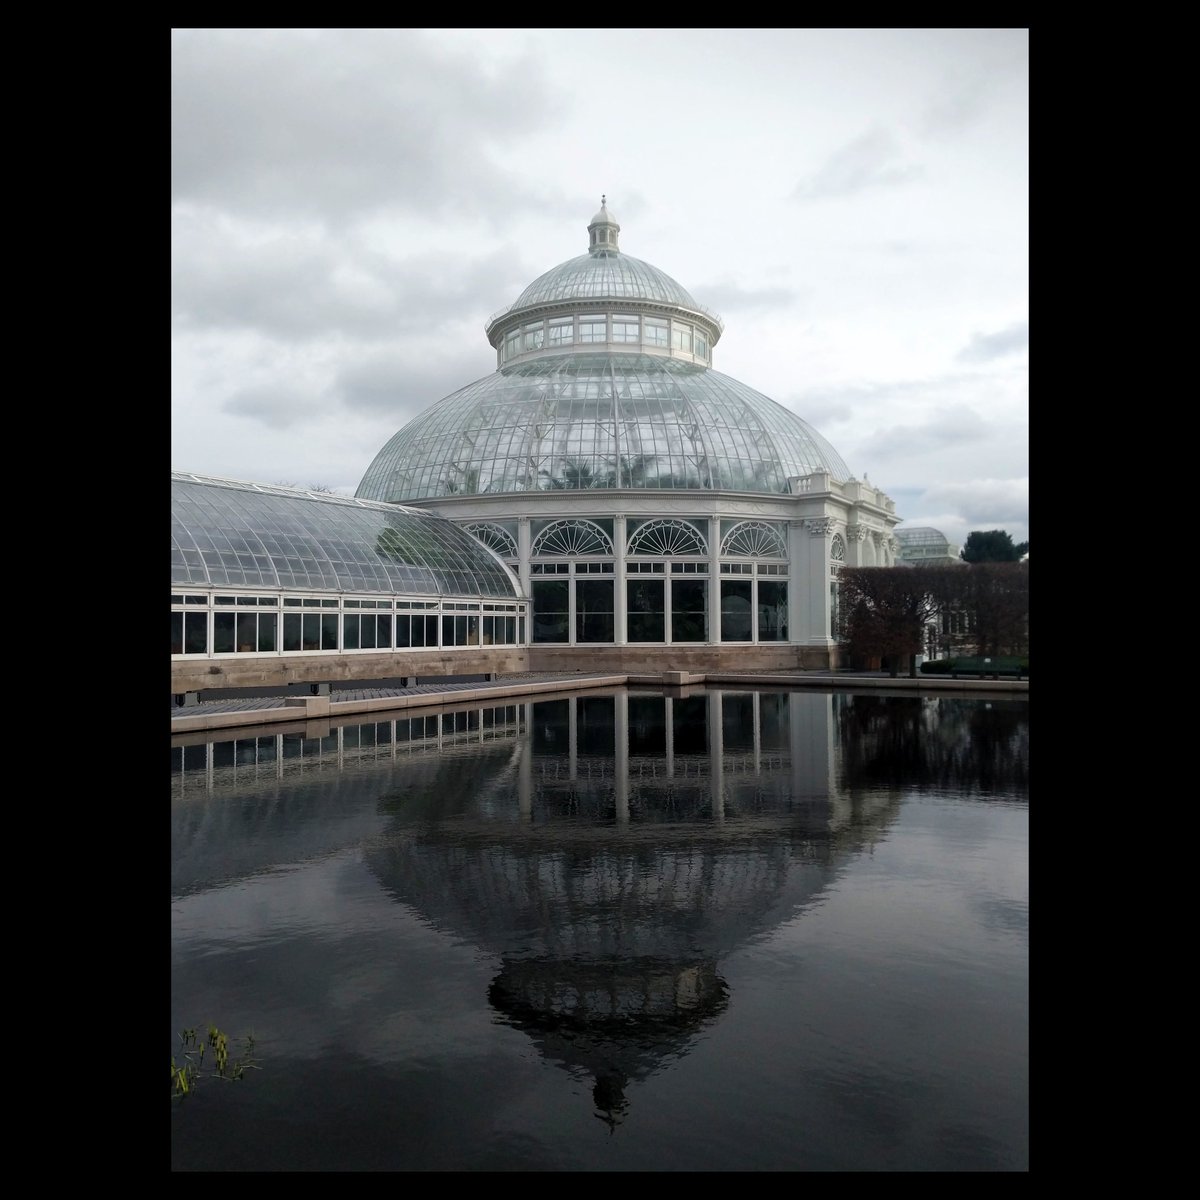 #greenhouse #dome #reflection #pool #newyorkbotanicalgarden #bronx #sky #clouds #botanicalgarden #newyorkcity #newyork #botanicalgarden #botanical #garden #thebronx